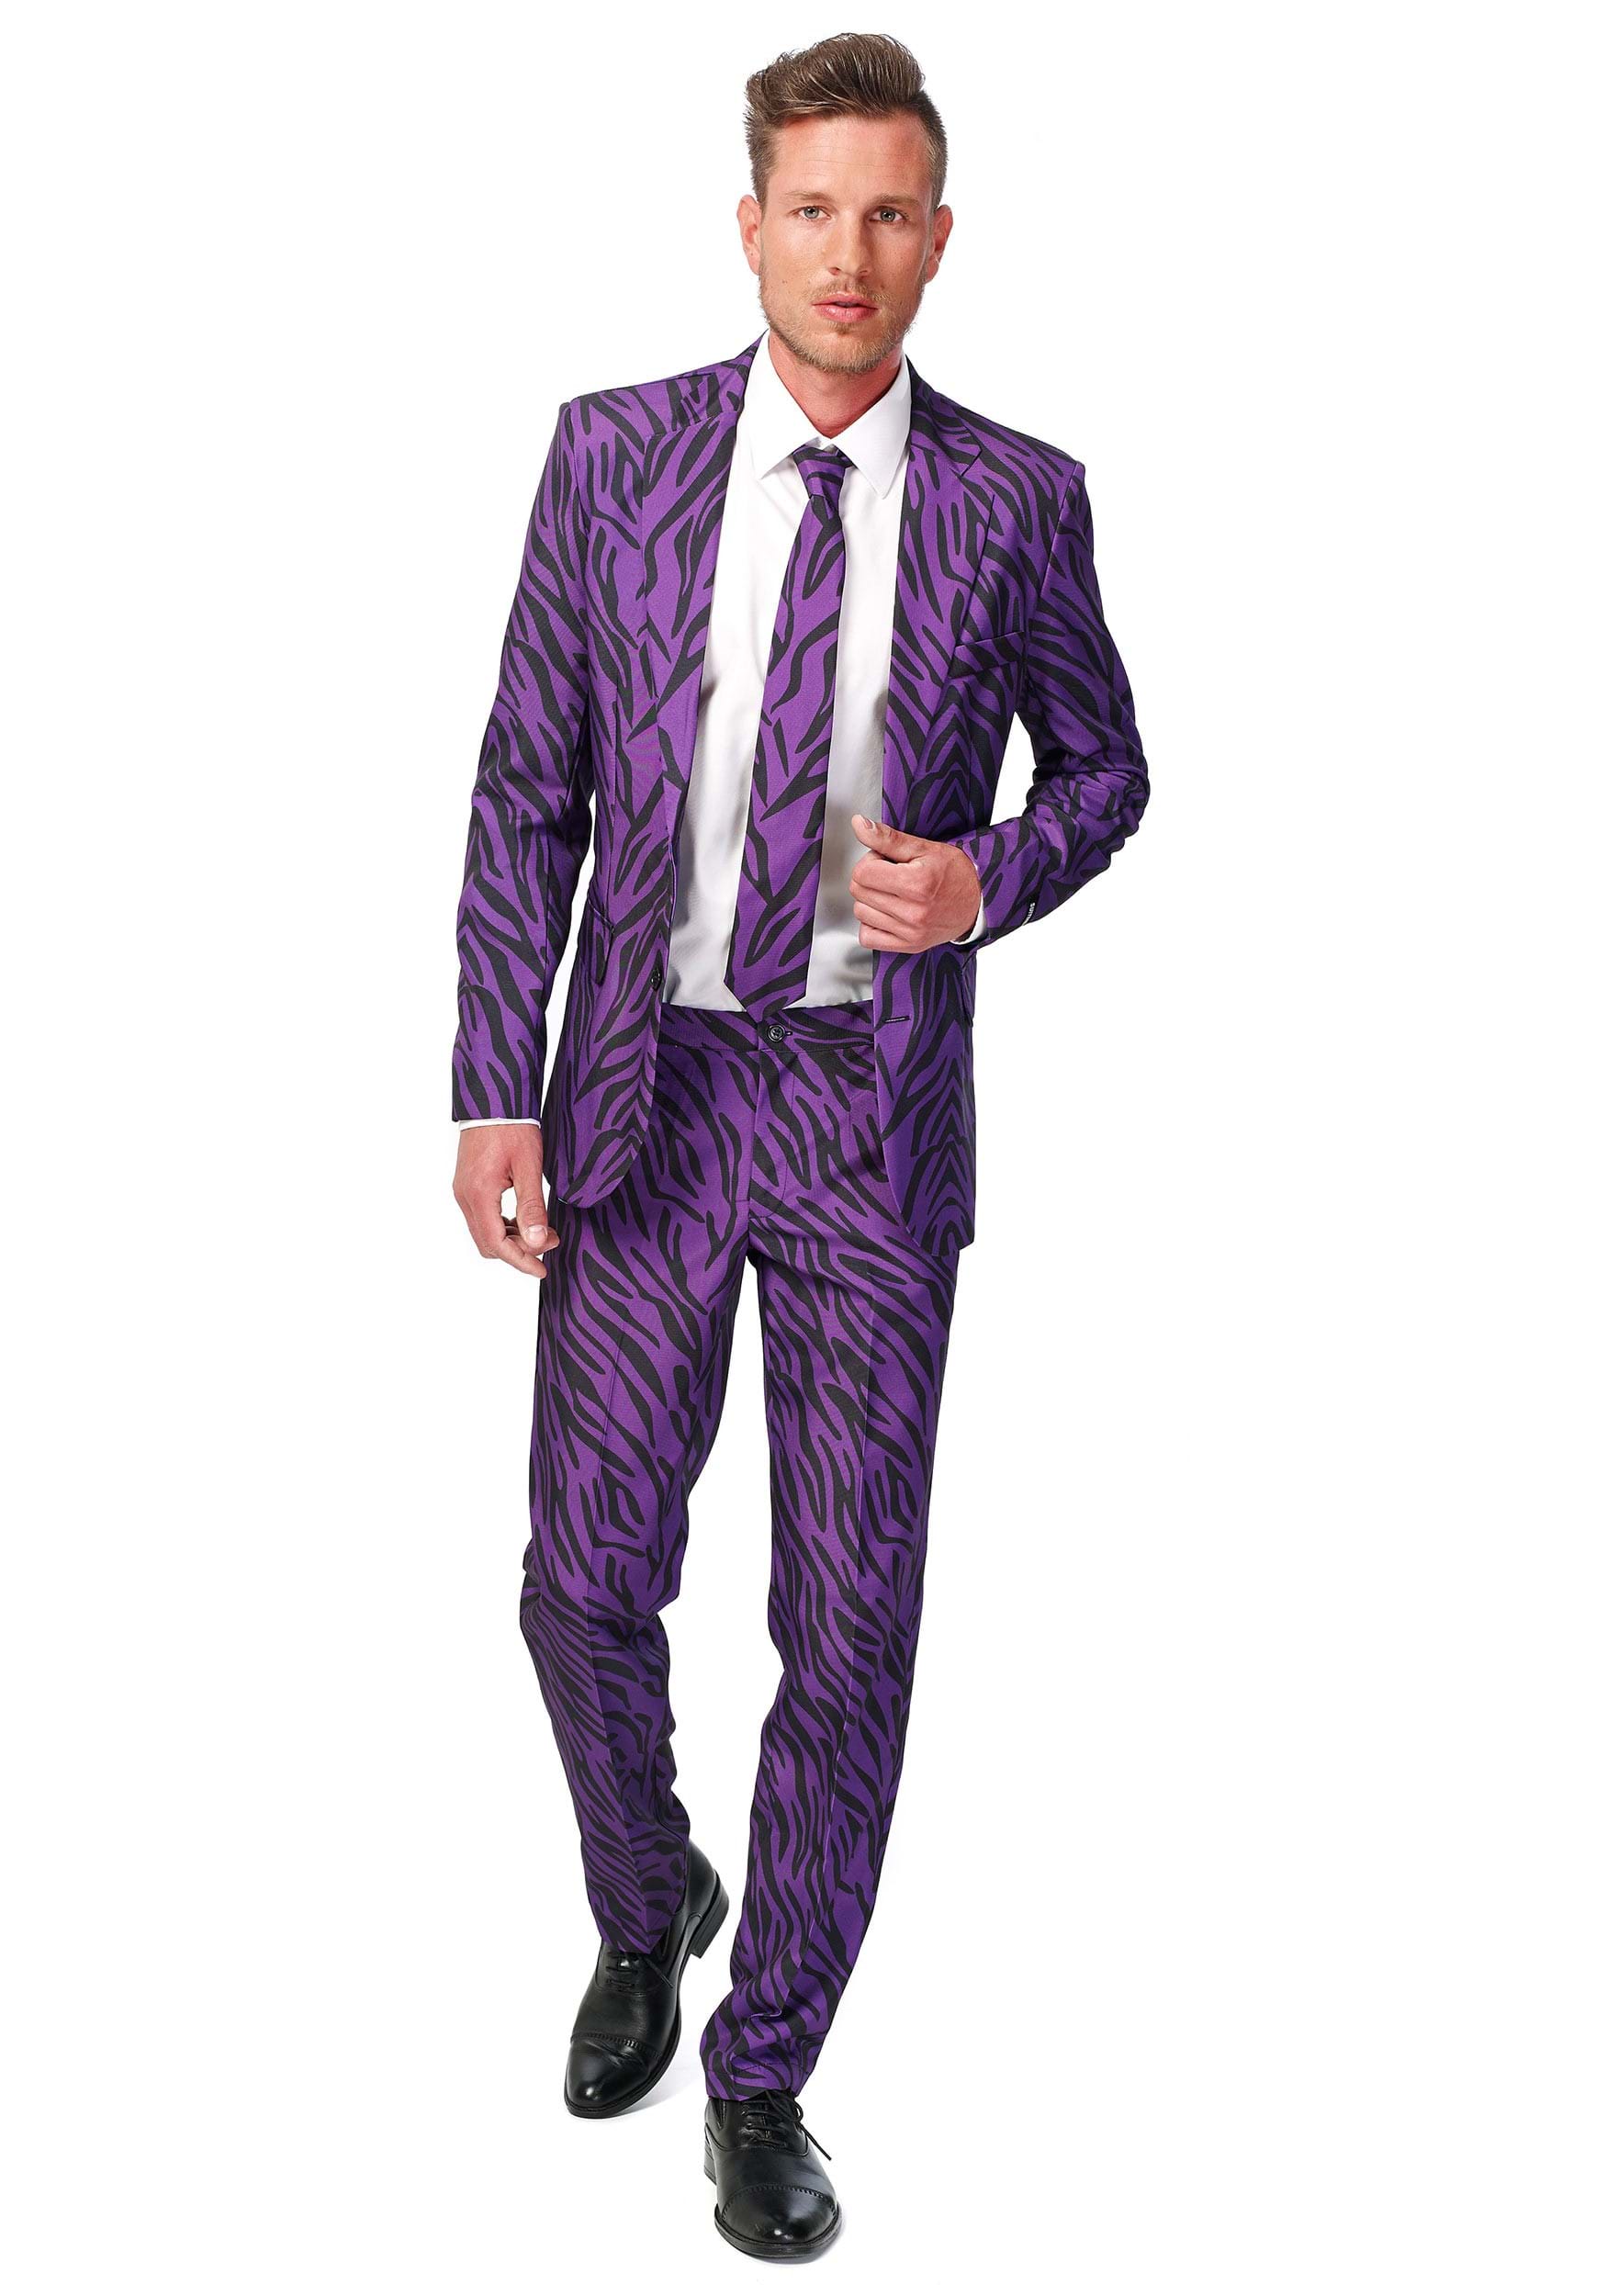 Suitmeister Basic Pimp Tiger Suit Fancy Dress Costume For Men